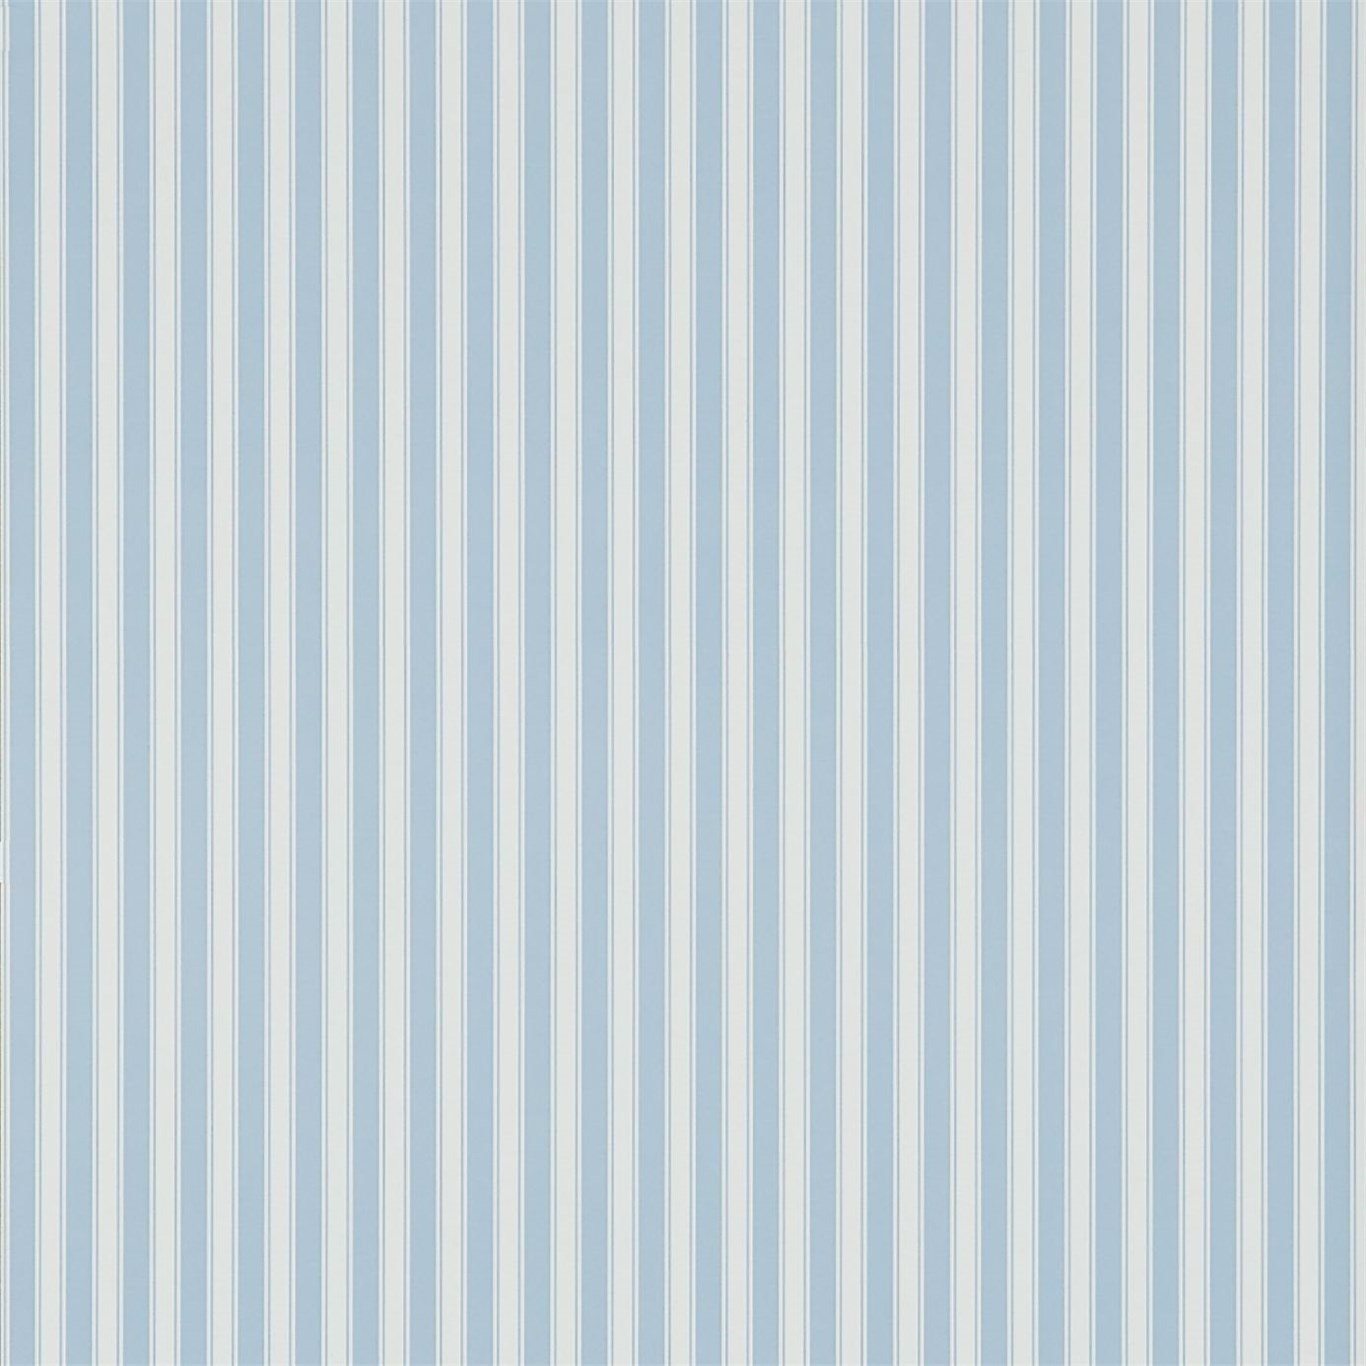 New Tiger Stripe Blue/Ivory Wallpaper by SAN